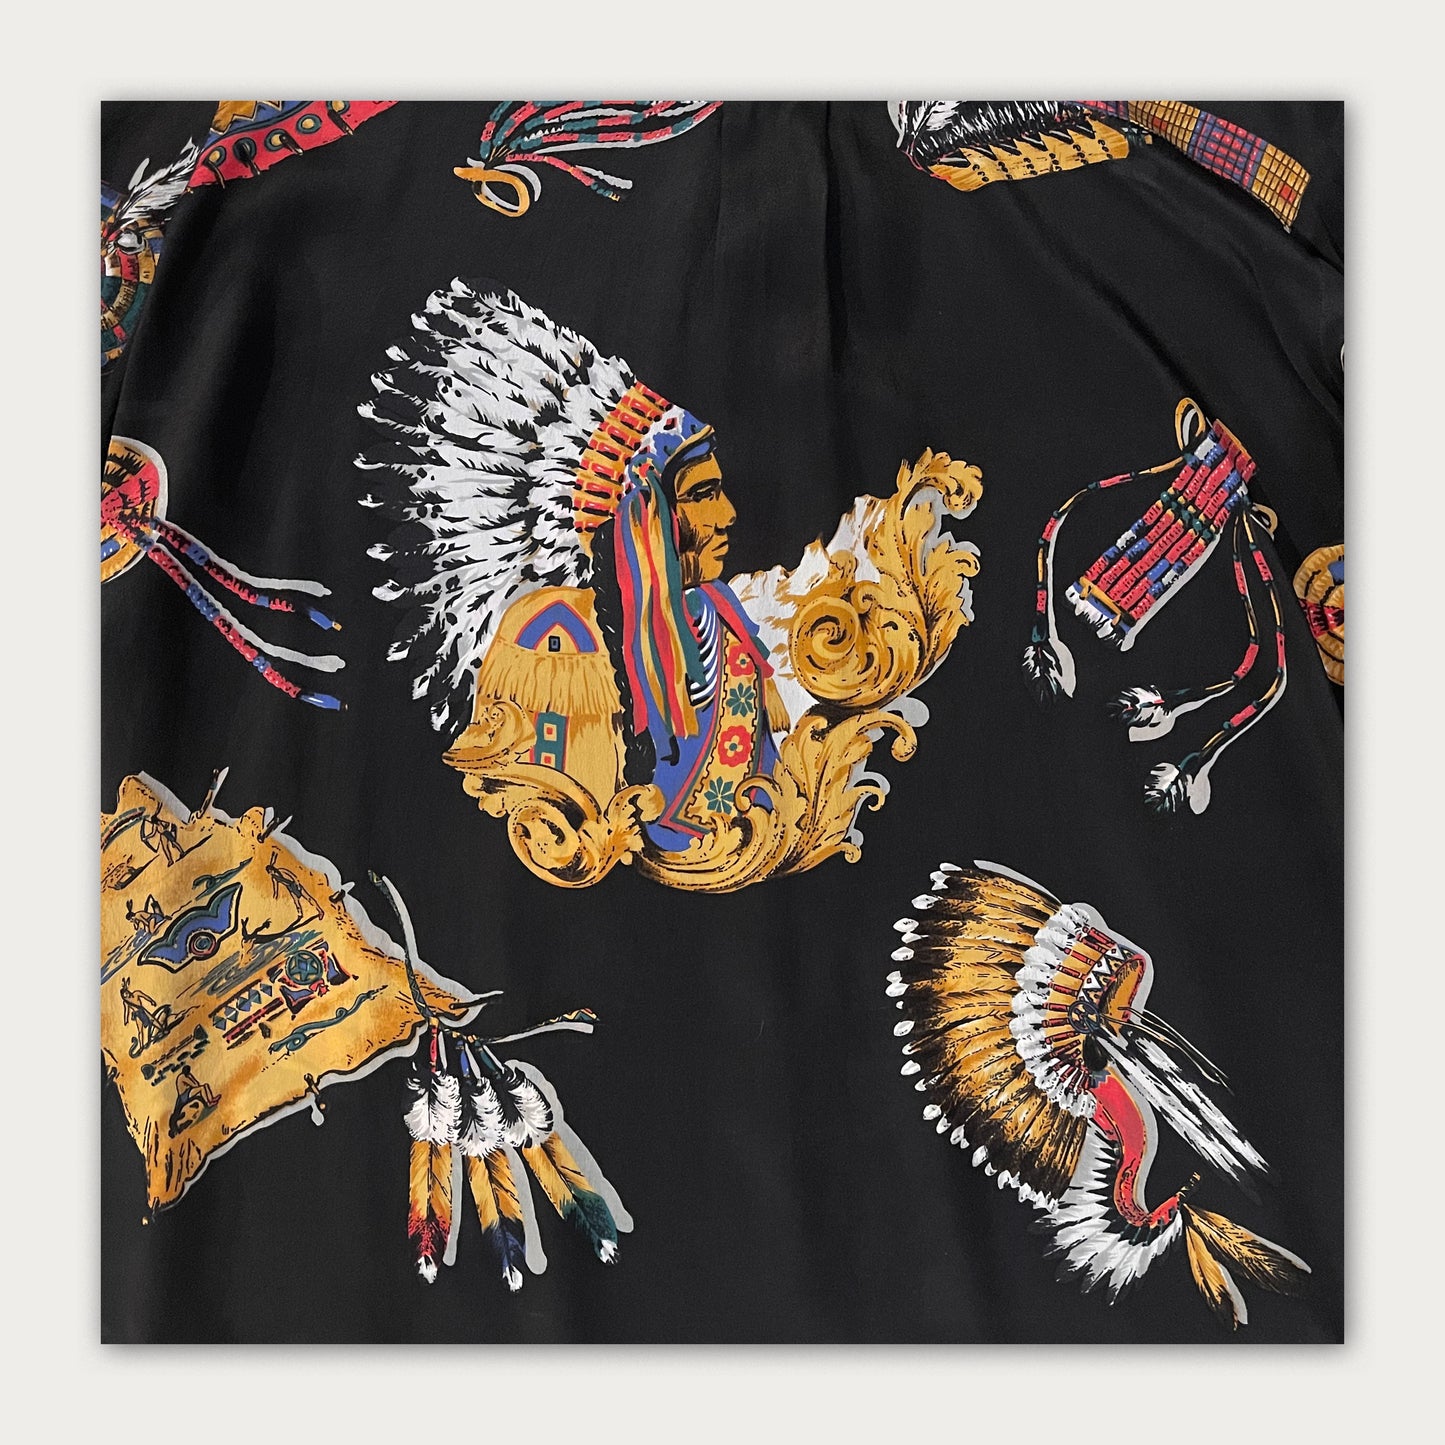 Native American Shirt